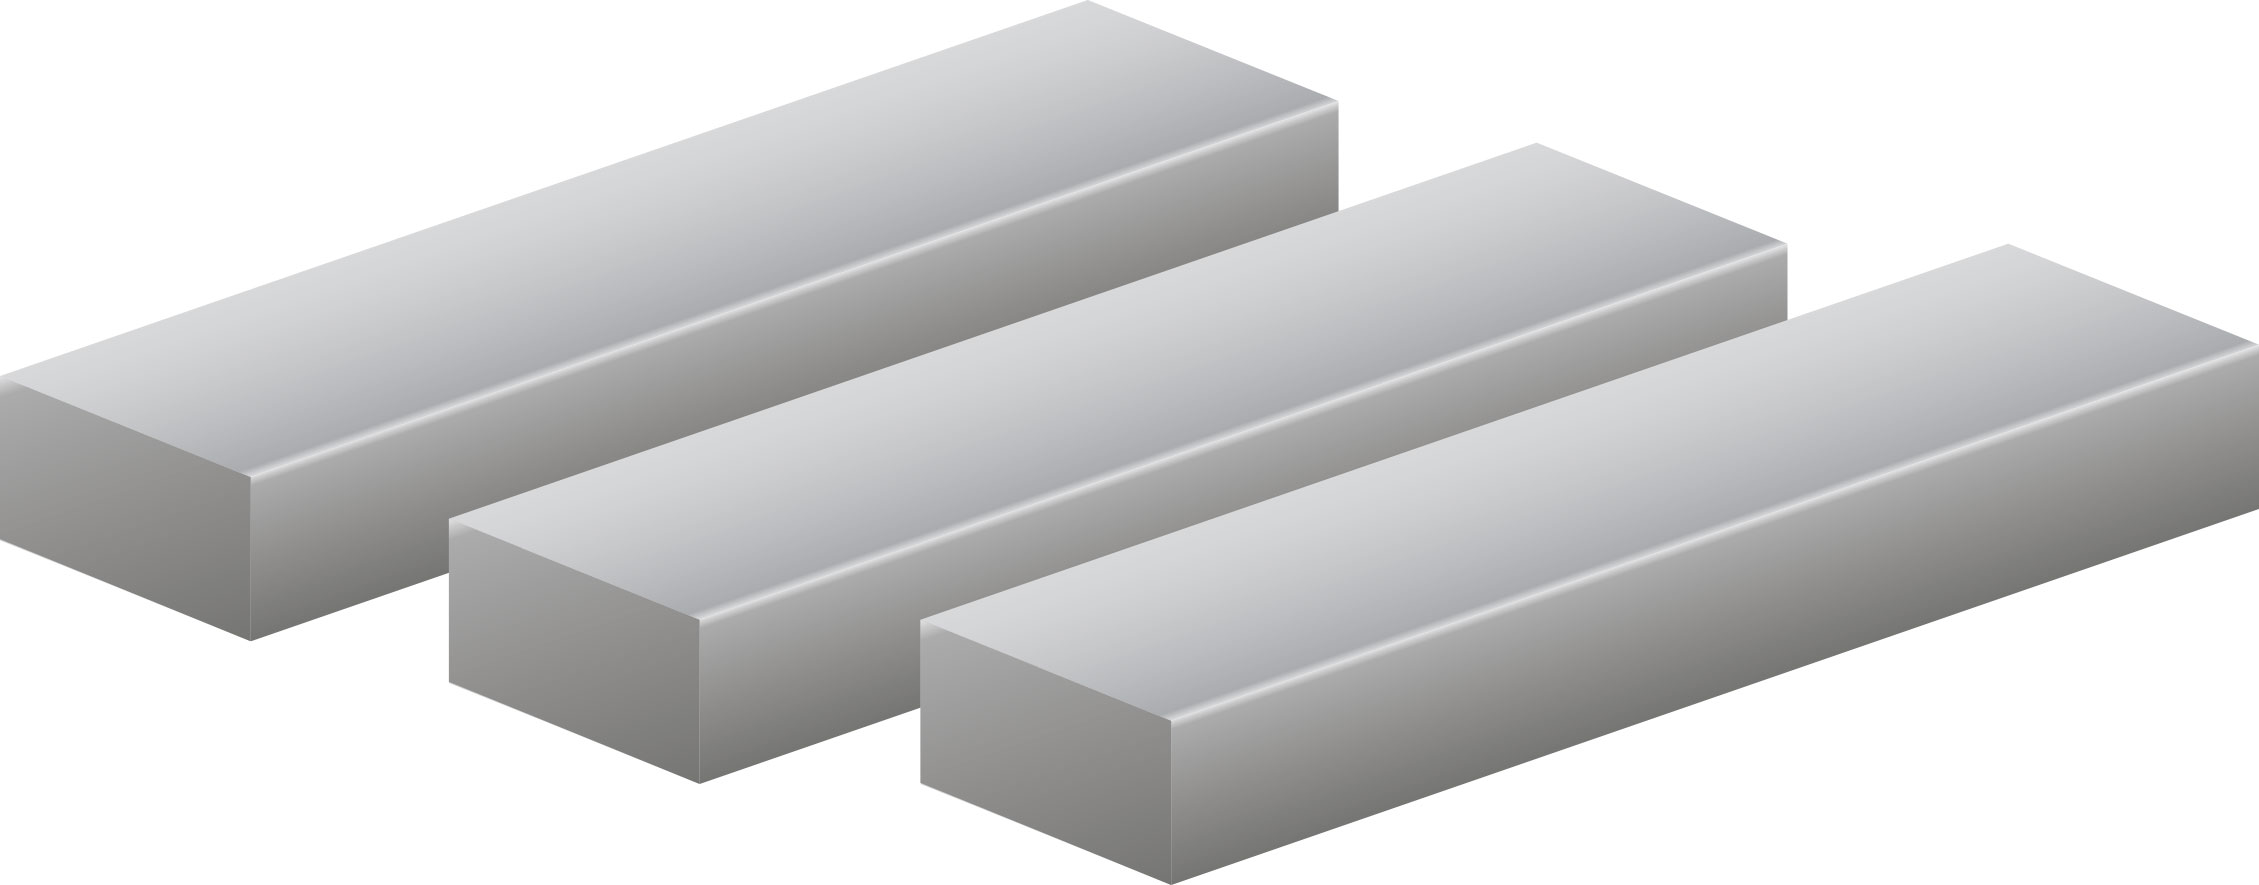 Aluminiumbleche Aluminium-Flachstange Dicke 8 mm × 12 mm × 250 mm,8 250mm DSFHKUYB 5-TLG 10 